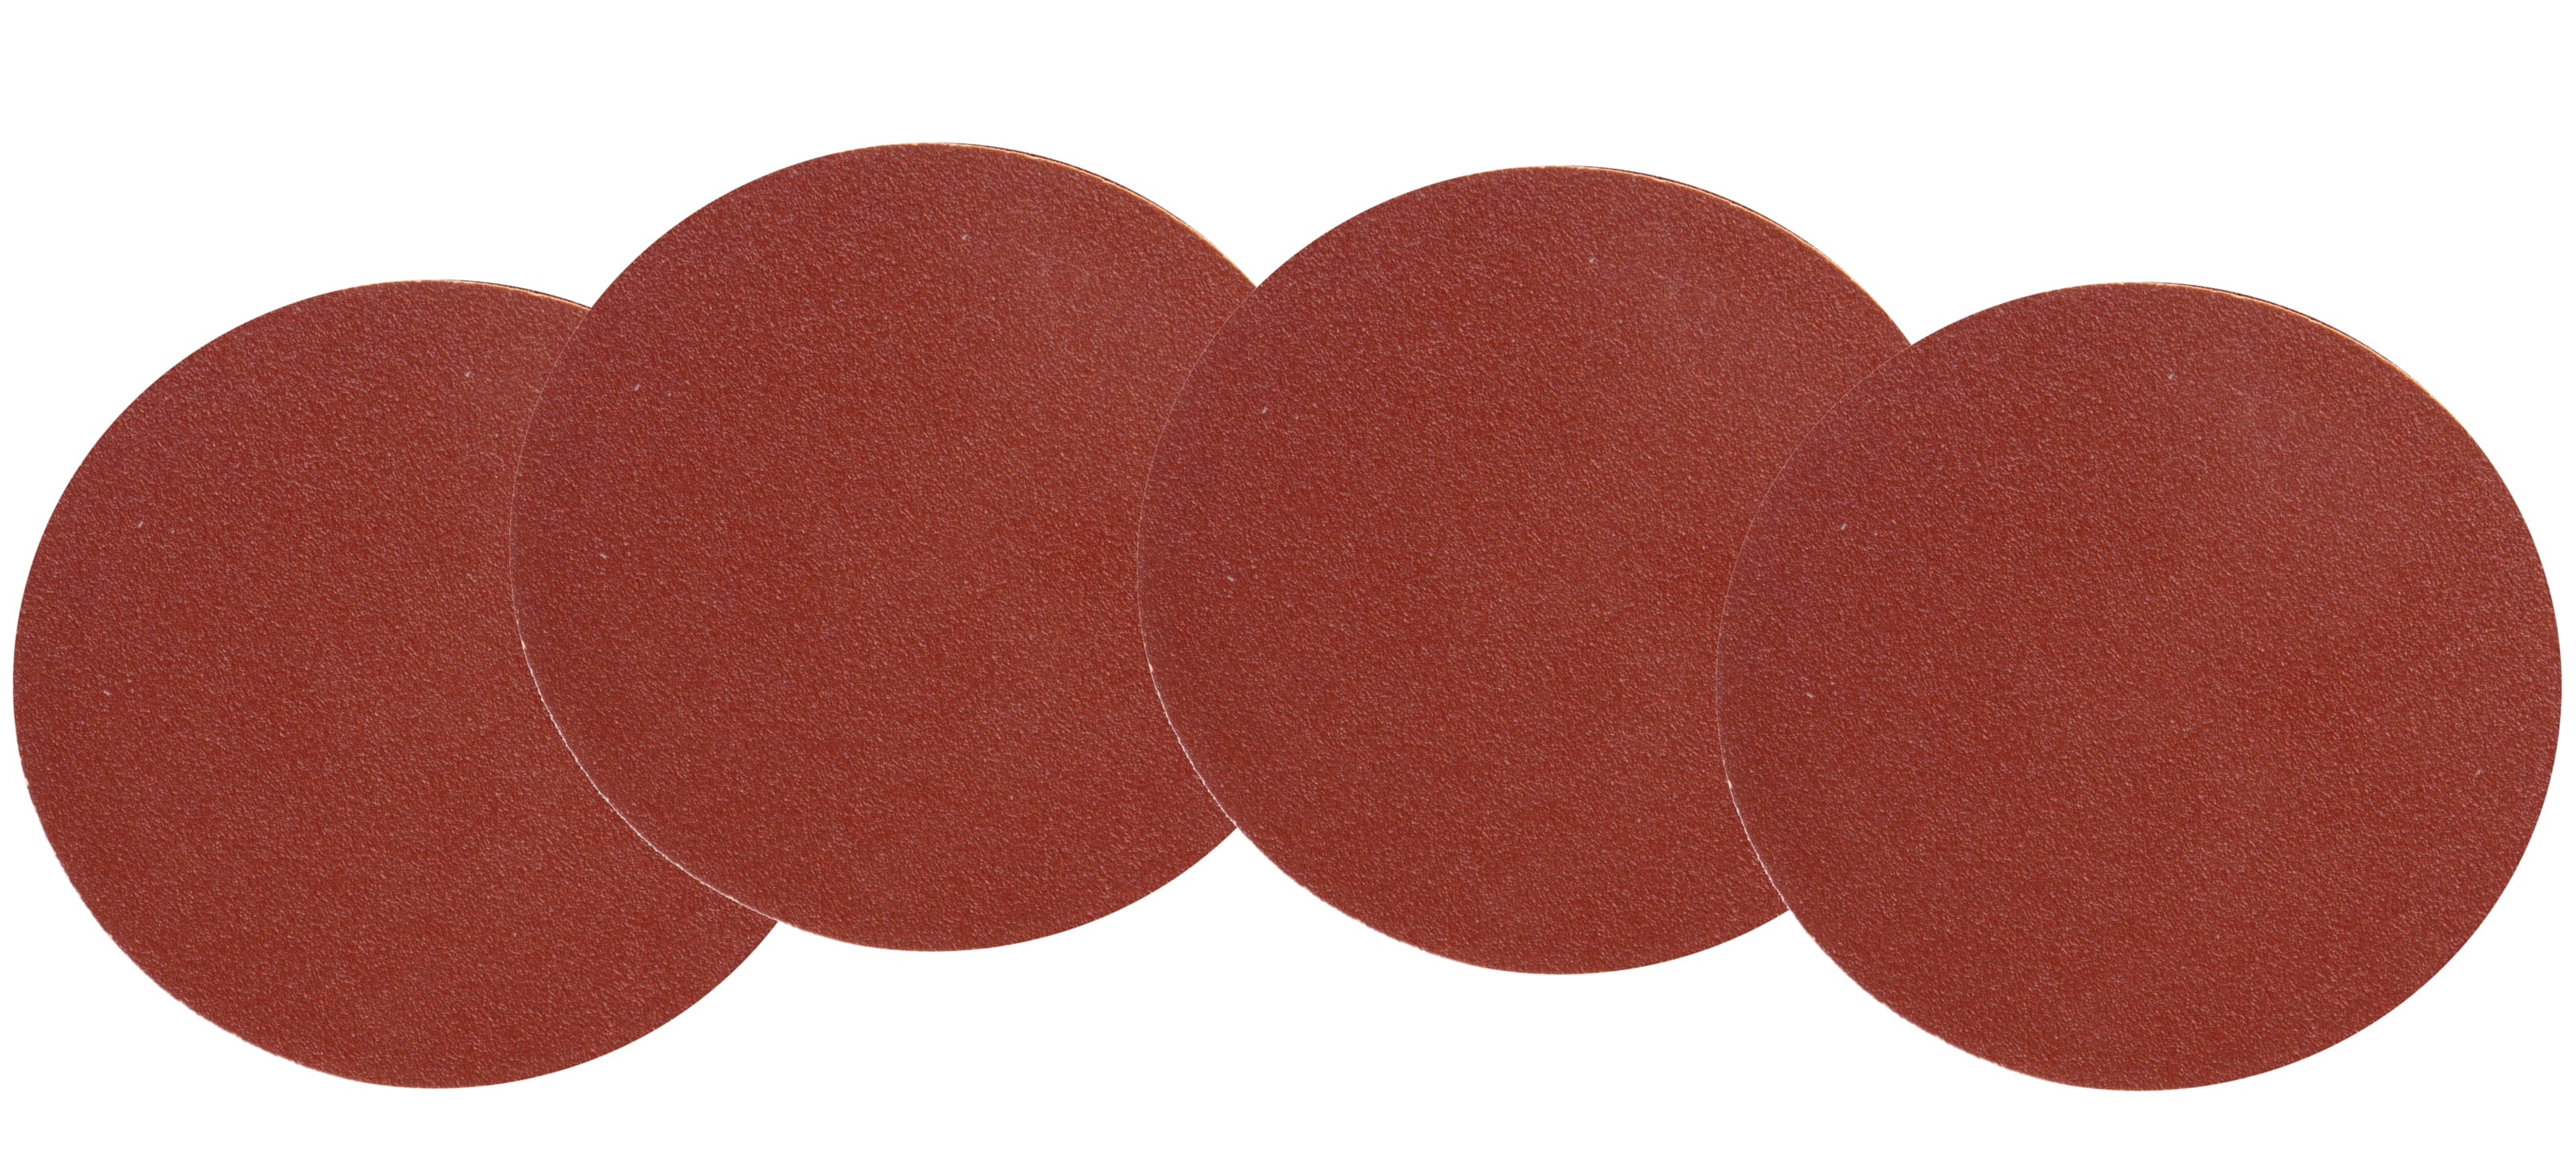 12 Inch 40 Grit Adhesive Back Aluminum Oxide metal Sanding Discs 5 Pack